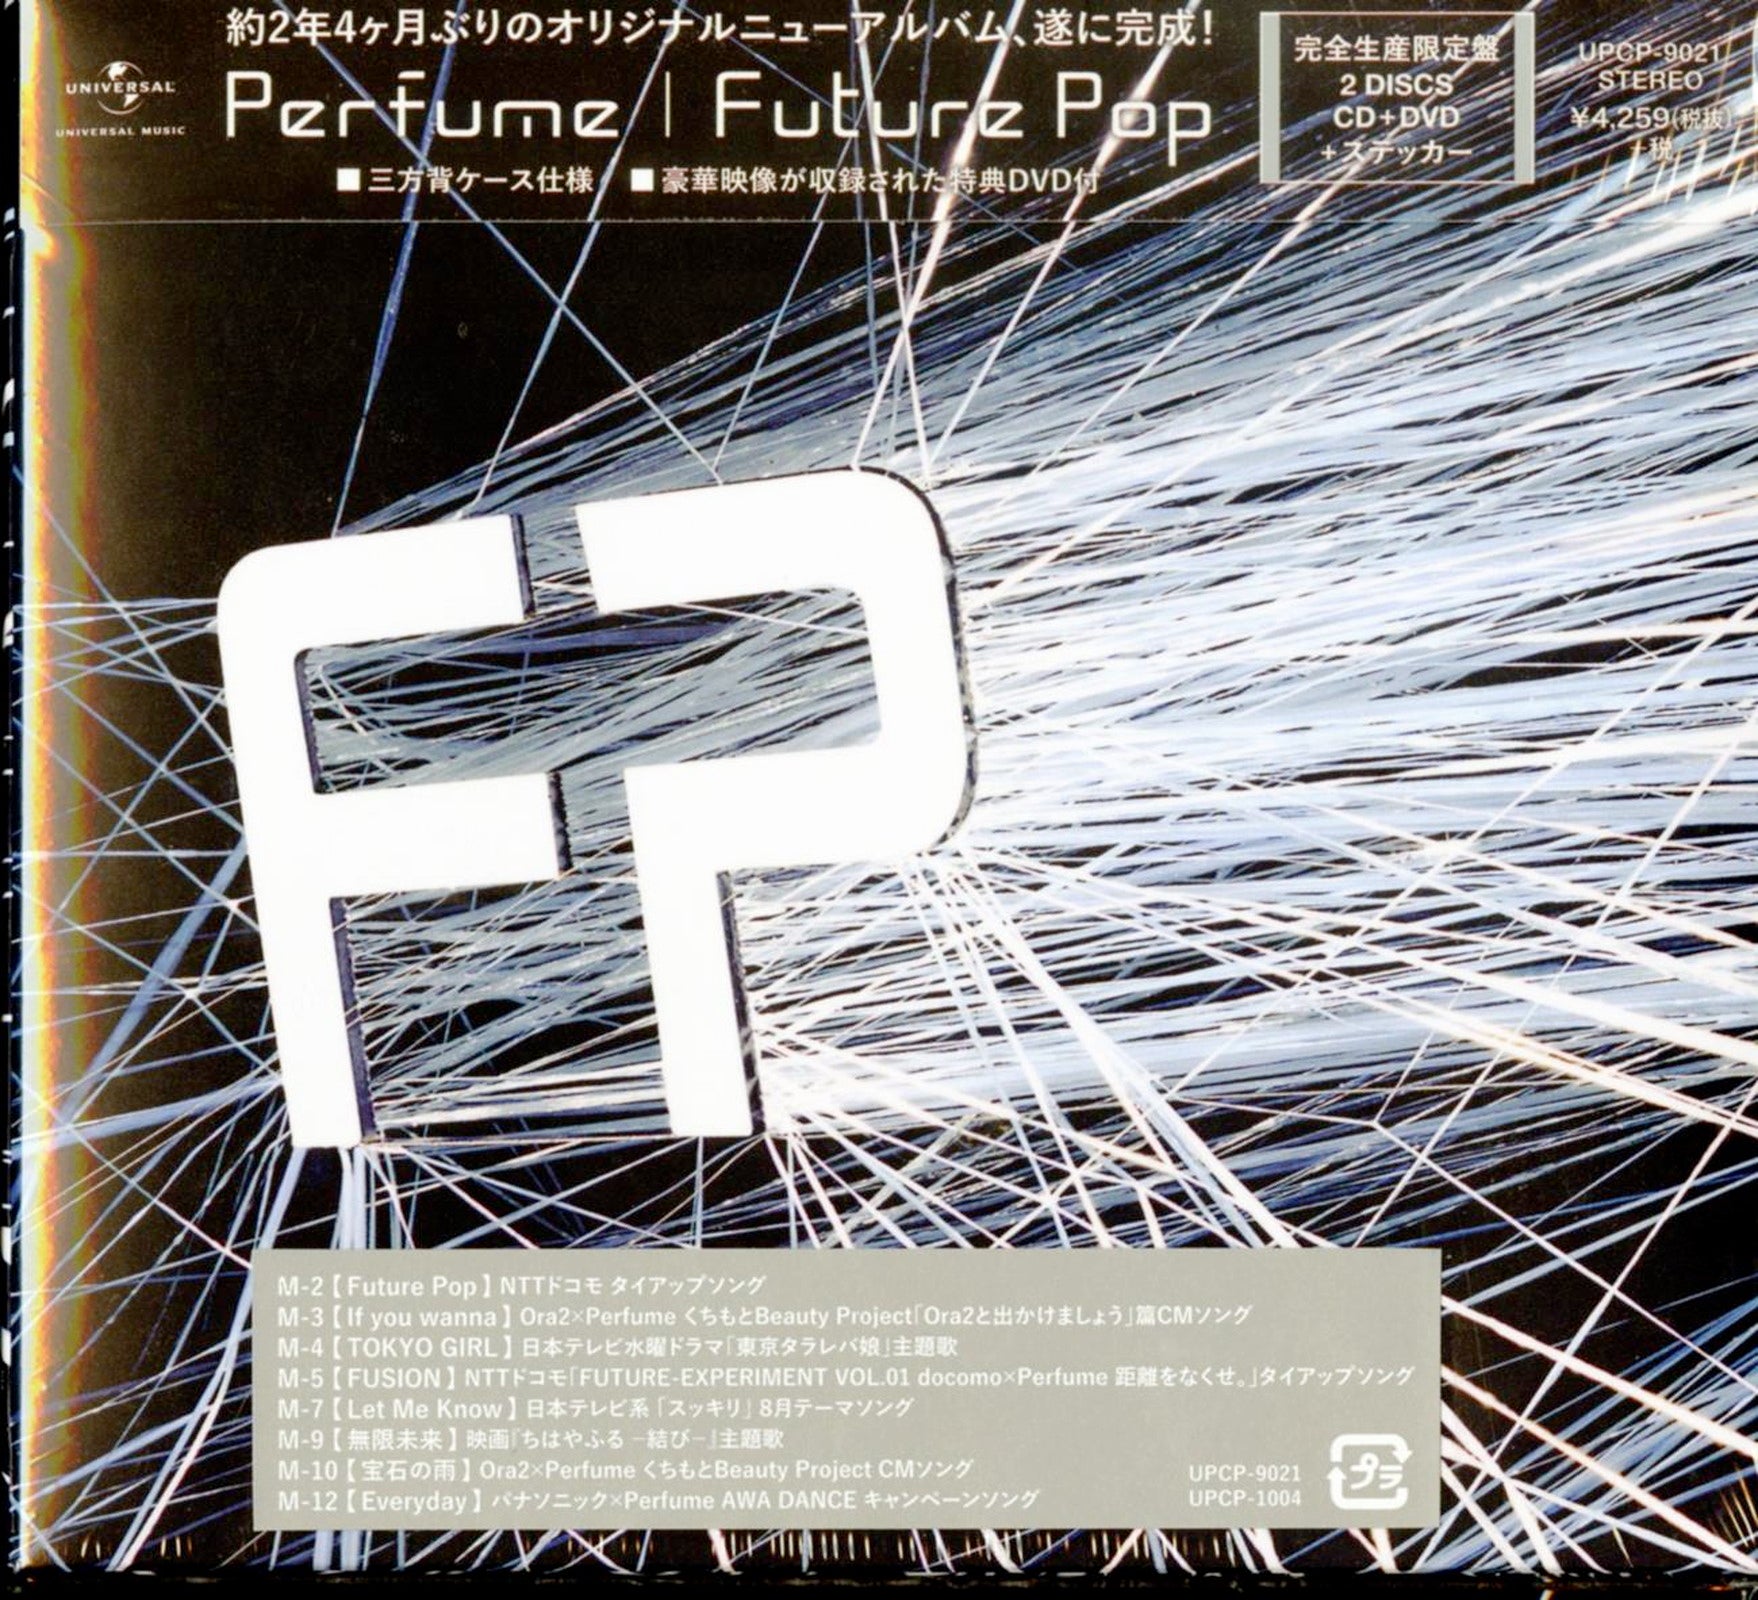 Perfume - Future Pop - Japan CD+DVD Limited Edition - CDs Vinyl